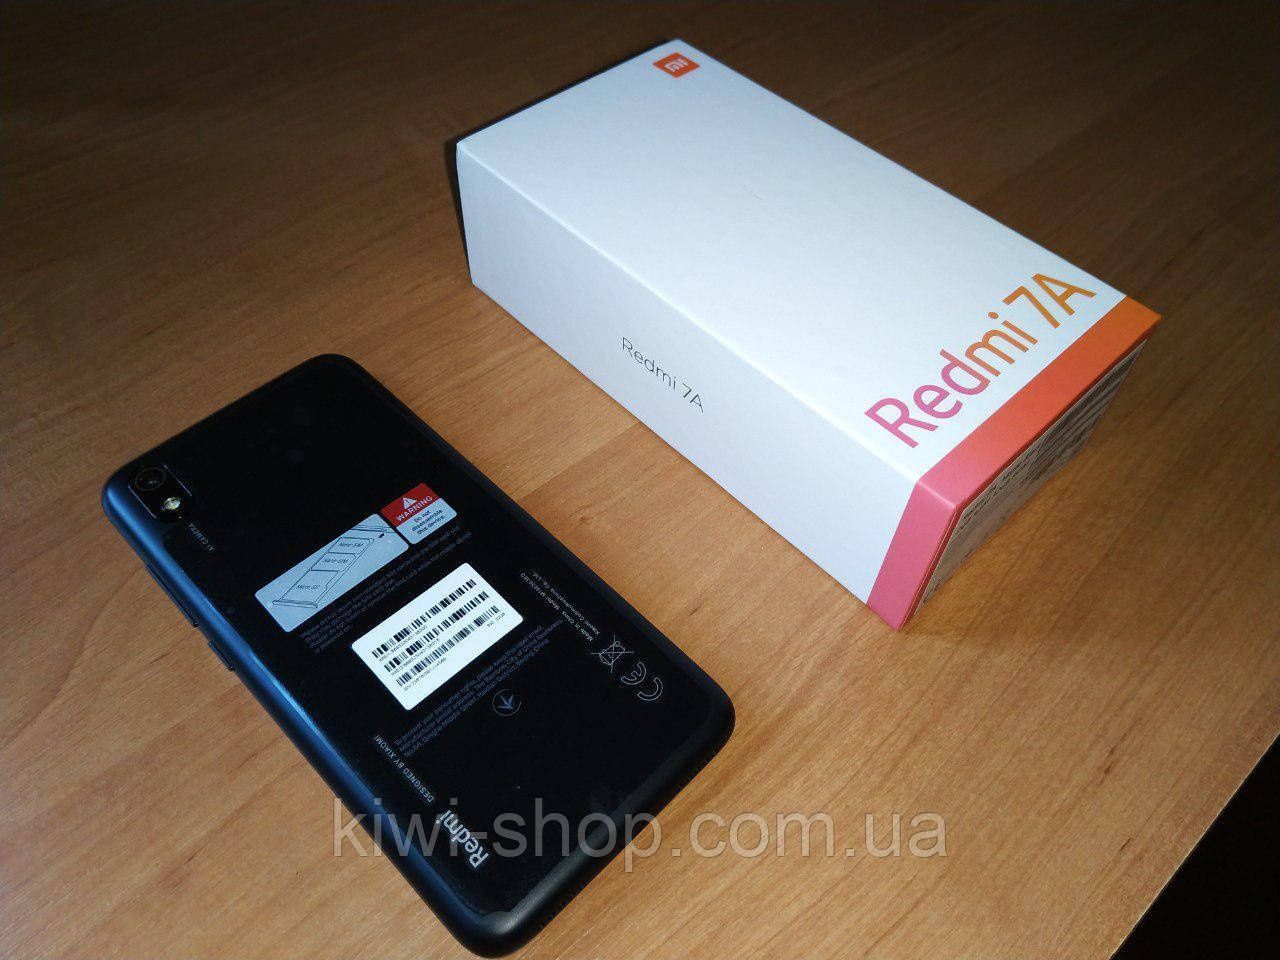 Xiaomi Redmi 7a телефон сотовый не дорого